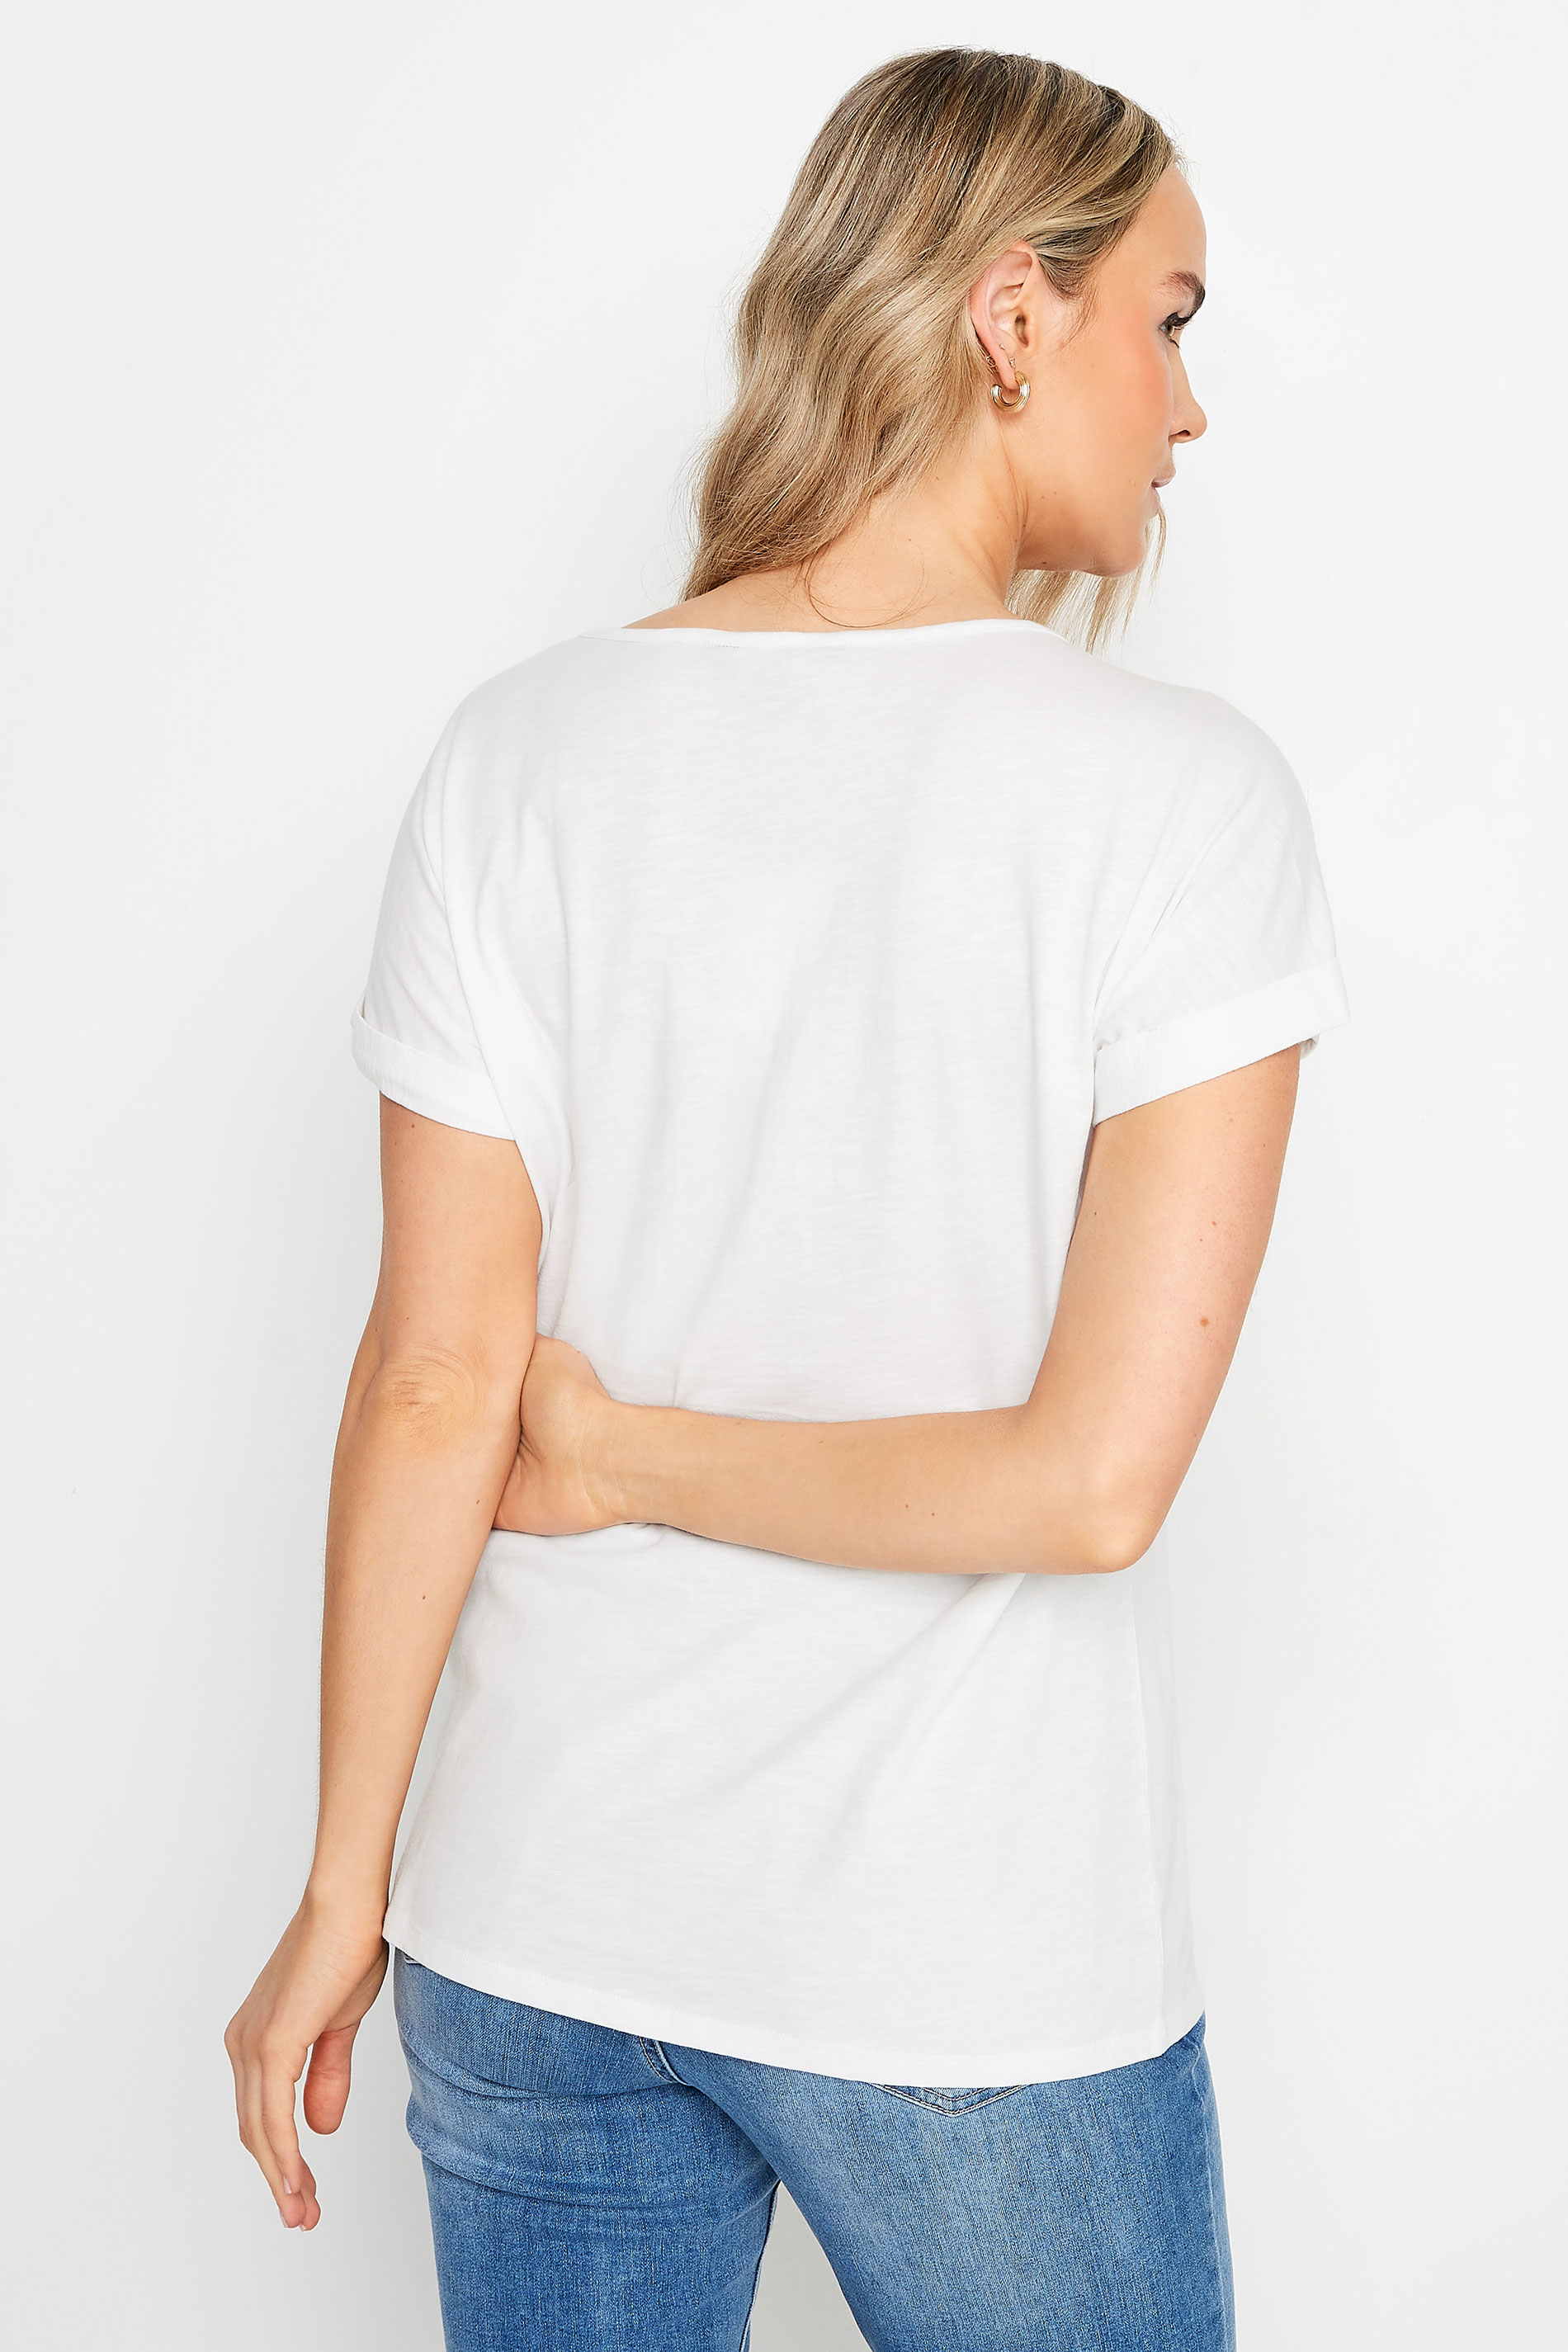 LTS Tall Women's Ivory White Cotton Henley T-Shirt | Long Tall Sally 3